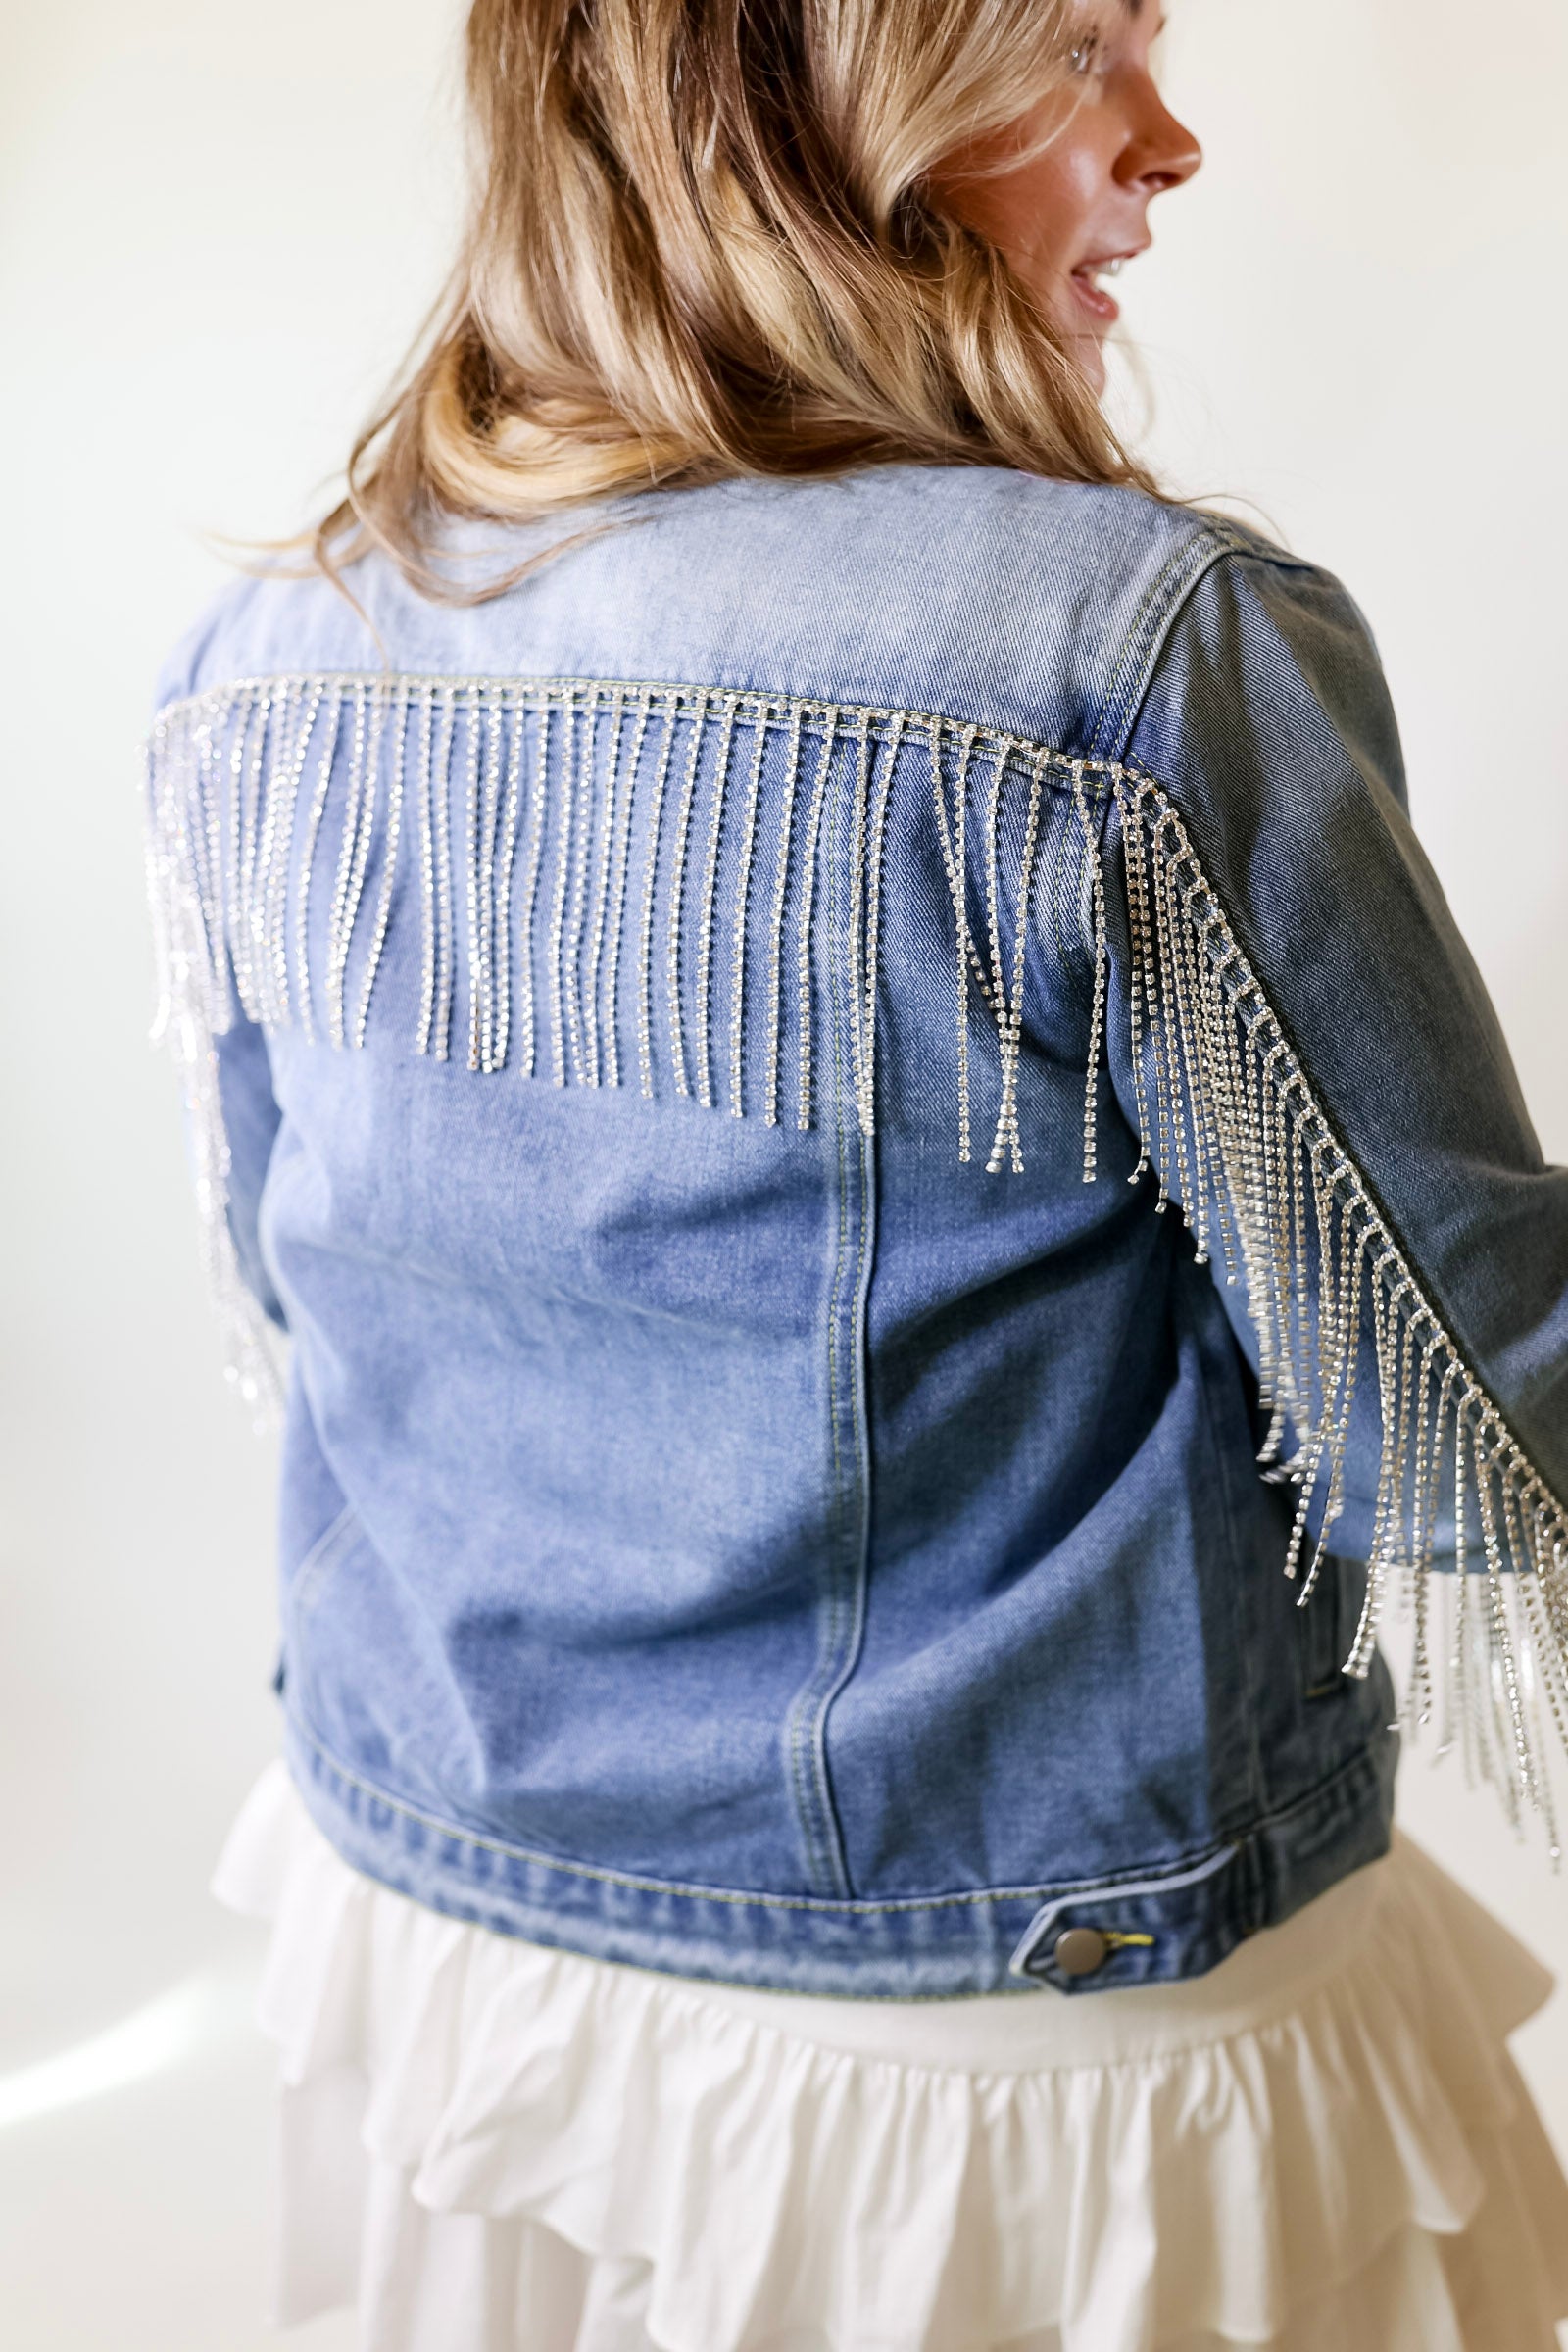 Rhinestone Cowgirl Crystal Fringe Denim Jacket in Medium Wash - Giddy Up Glamour Boutique